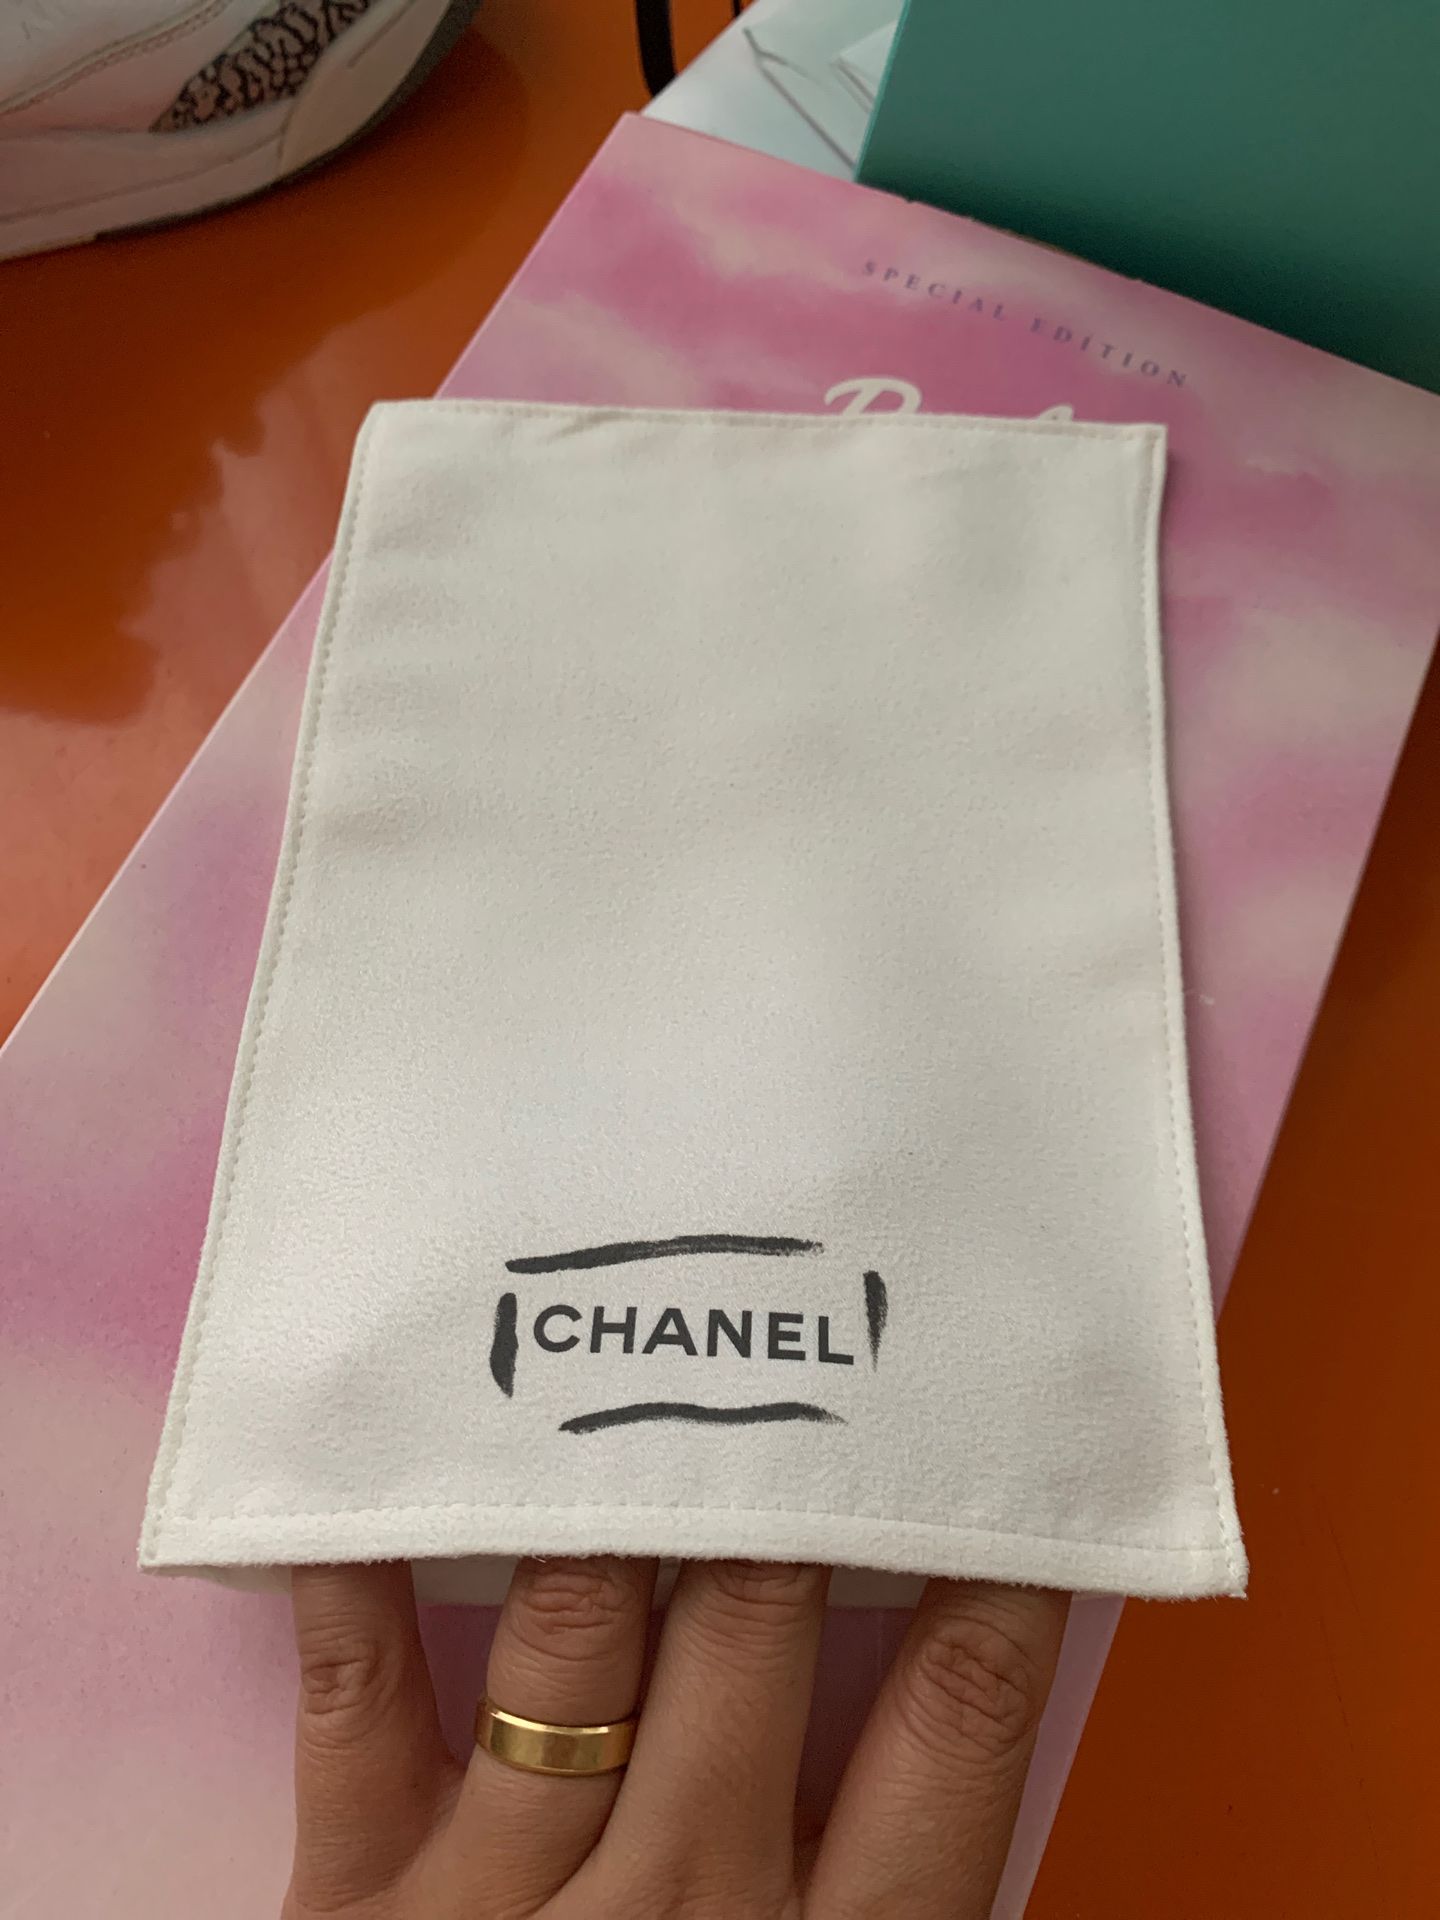 Chanel fabric bag